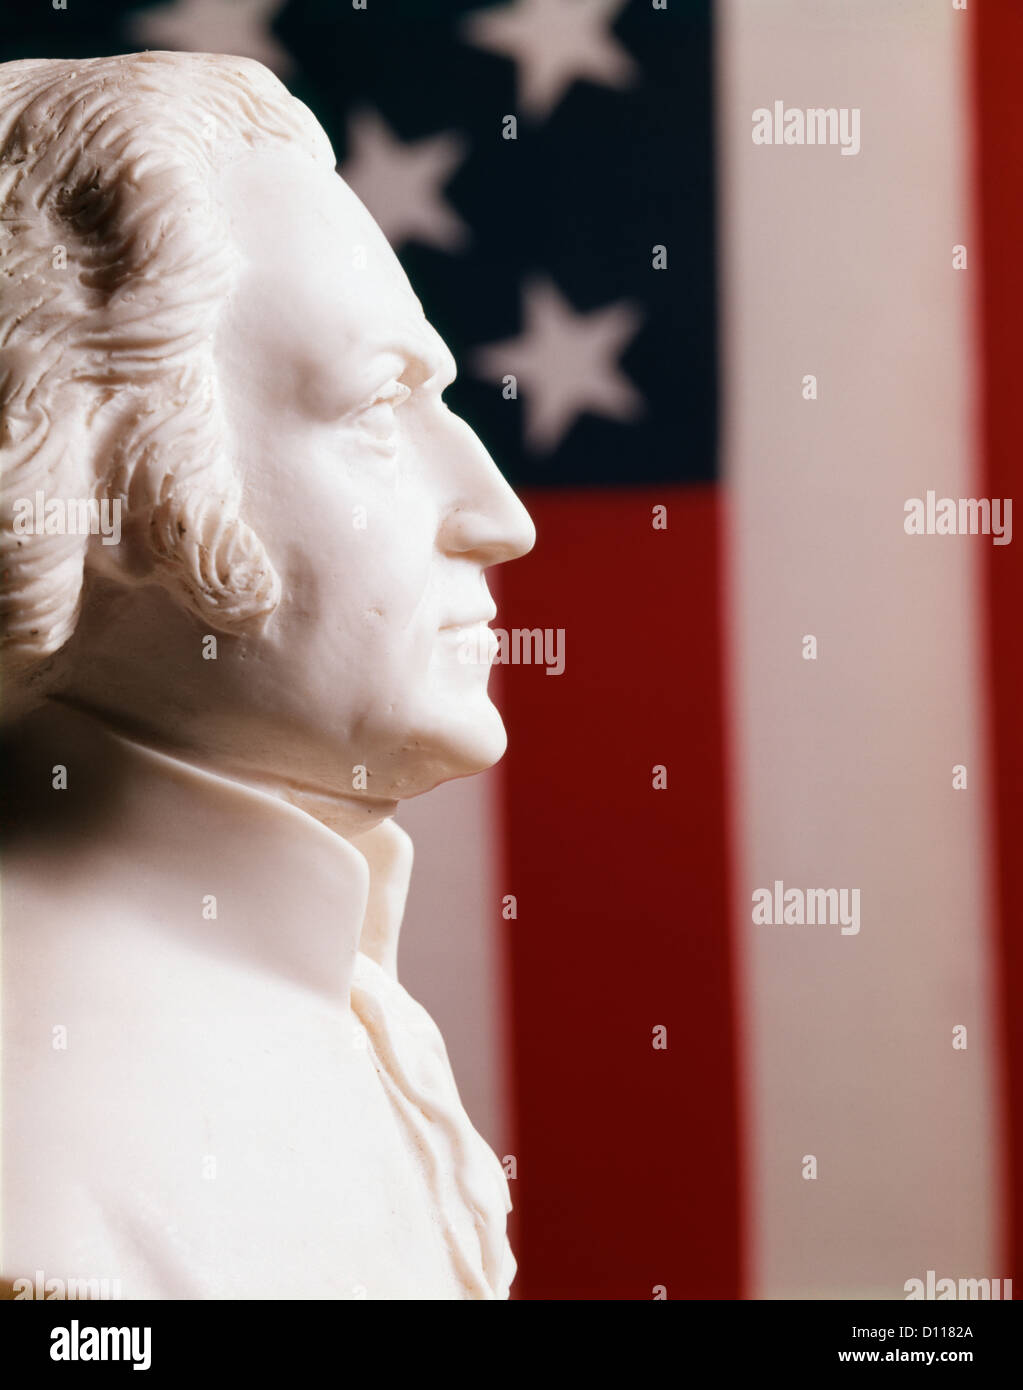 PROFILE WHITE PLASTER BUST STATUE GEORGE WASHINGTON AMERICAN PRESIDENT STARS FLAG BACKGROUND Stock Photo